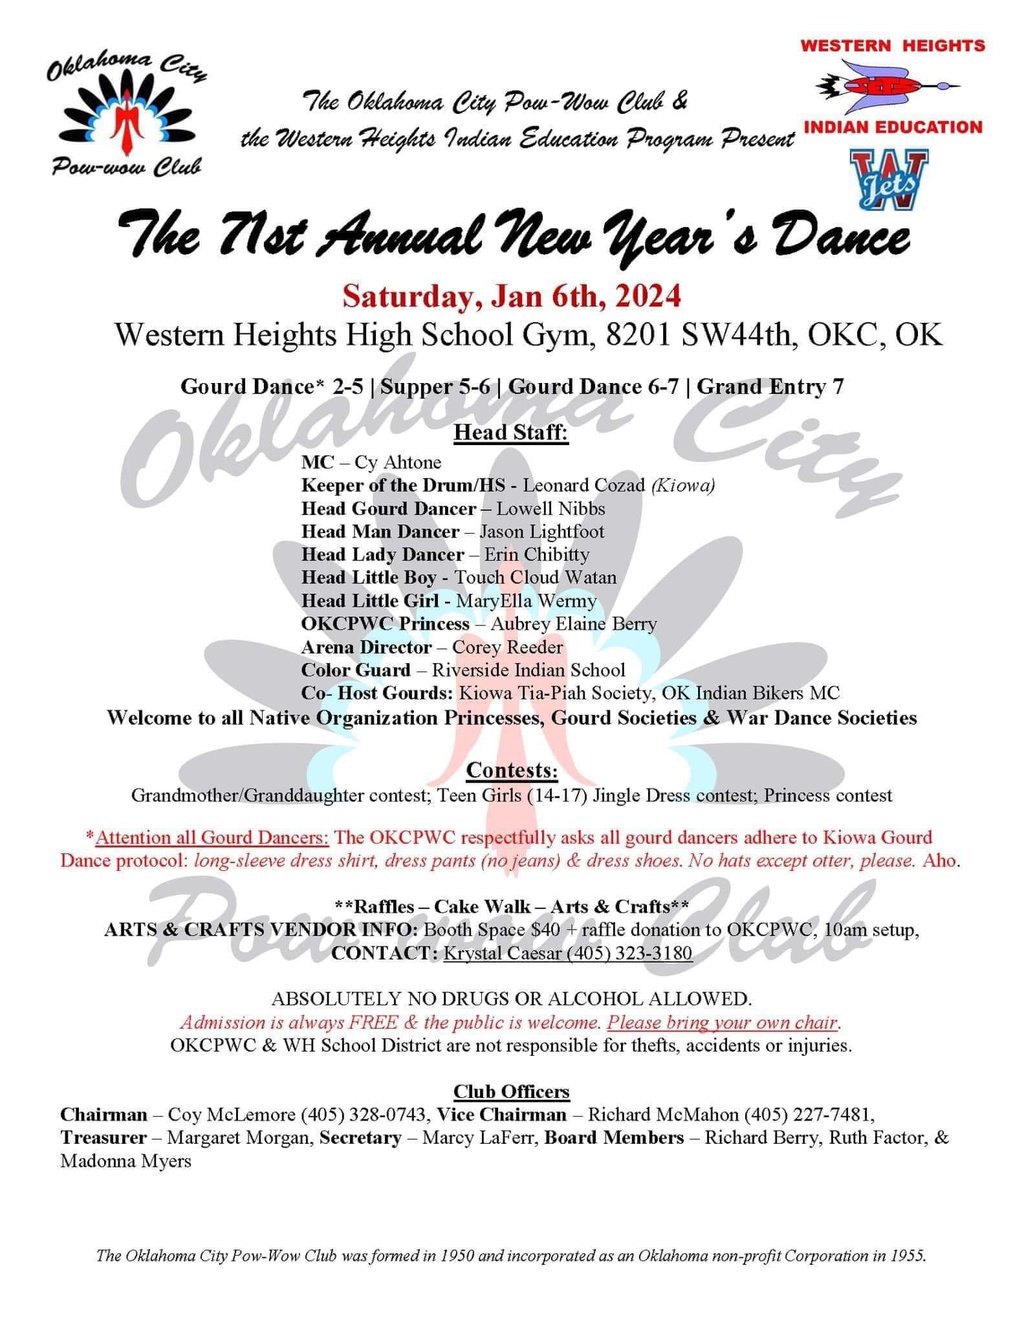 The 71st Annual New Year's Dance OKC Pow Wow Club 2024